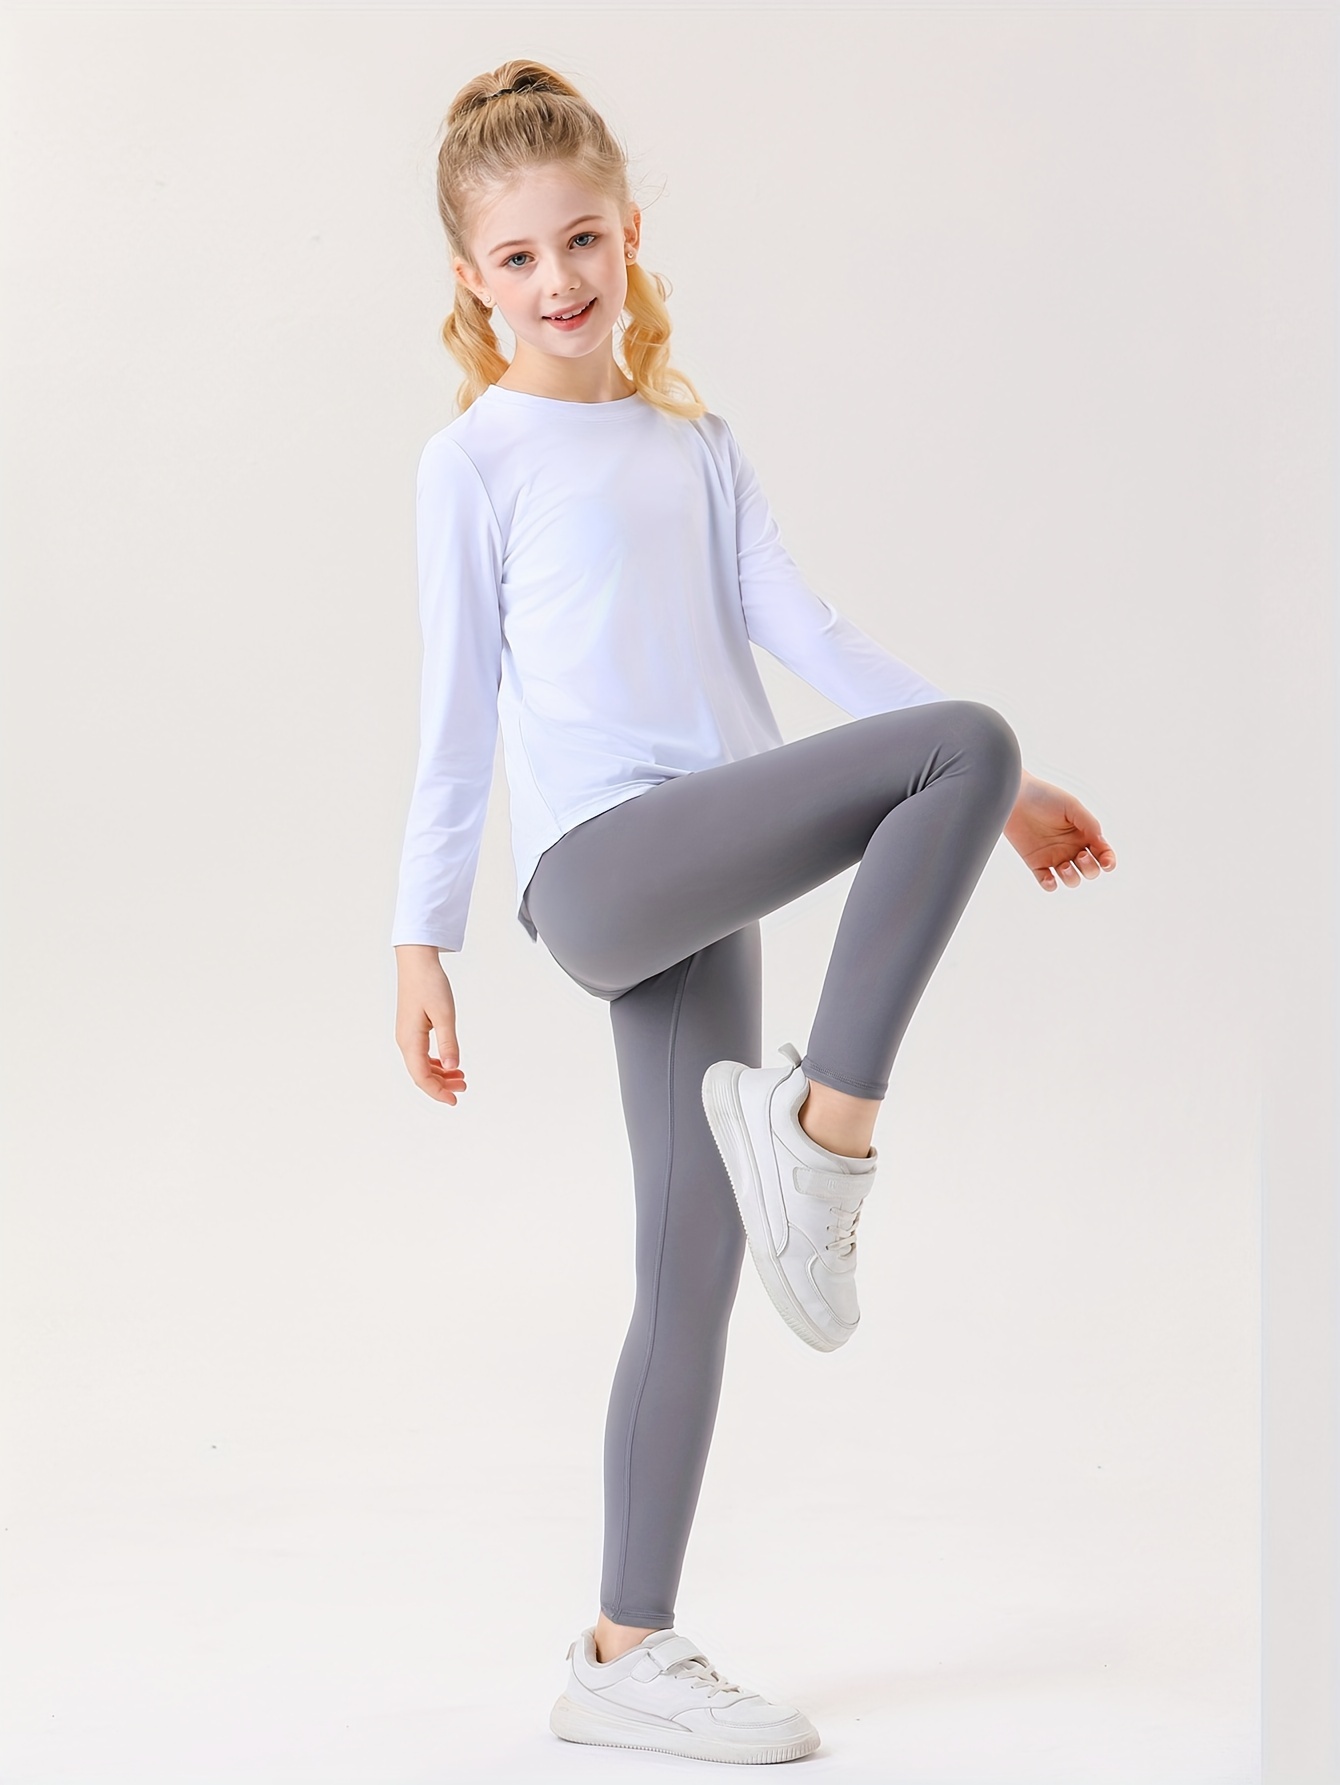 Stretchy & Comfy Solid Leggings Girls Slim Leggings Yoga Sports